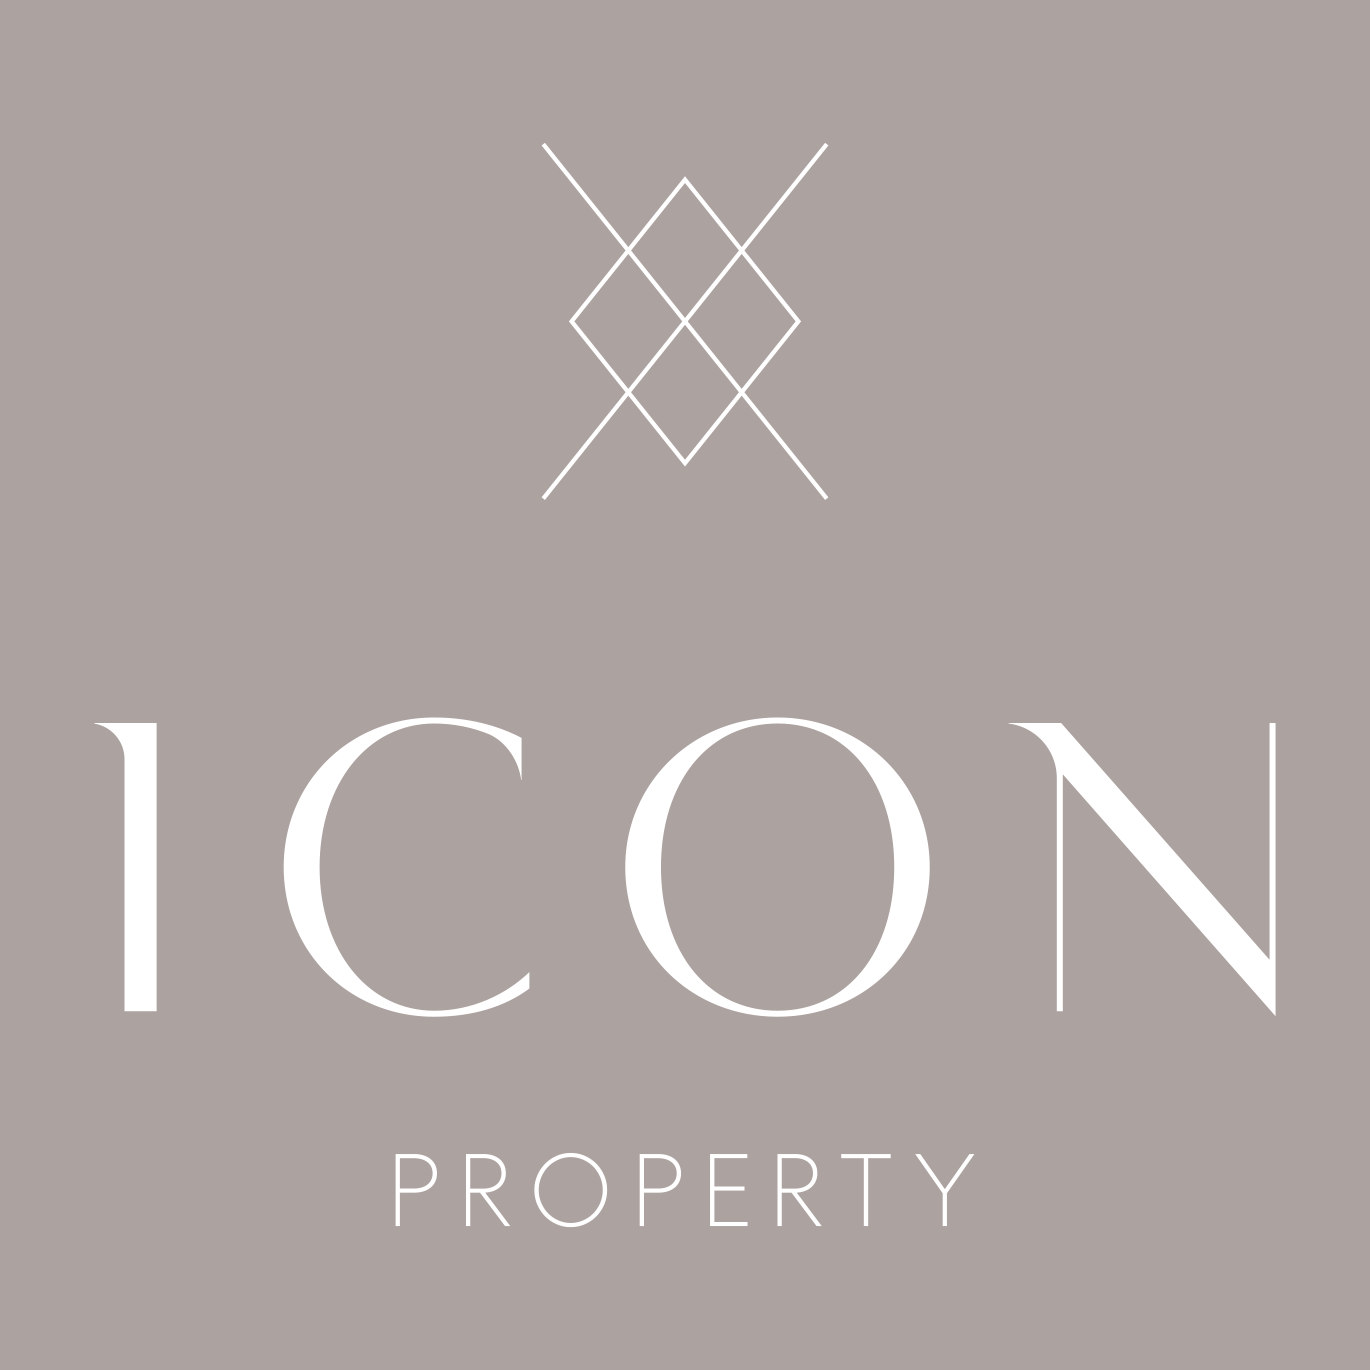 Icon Property